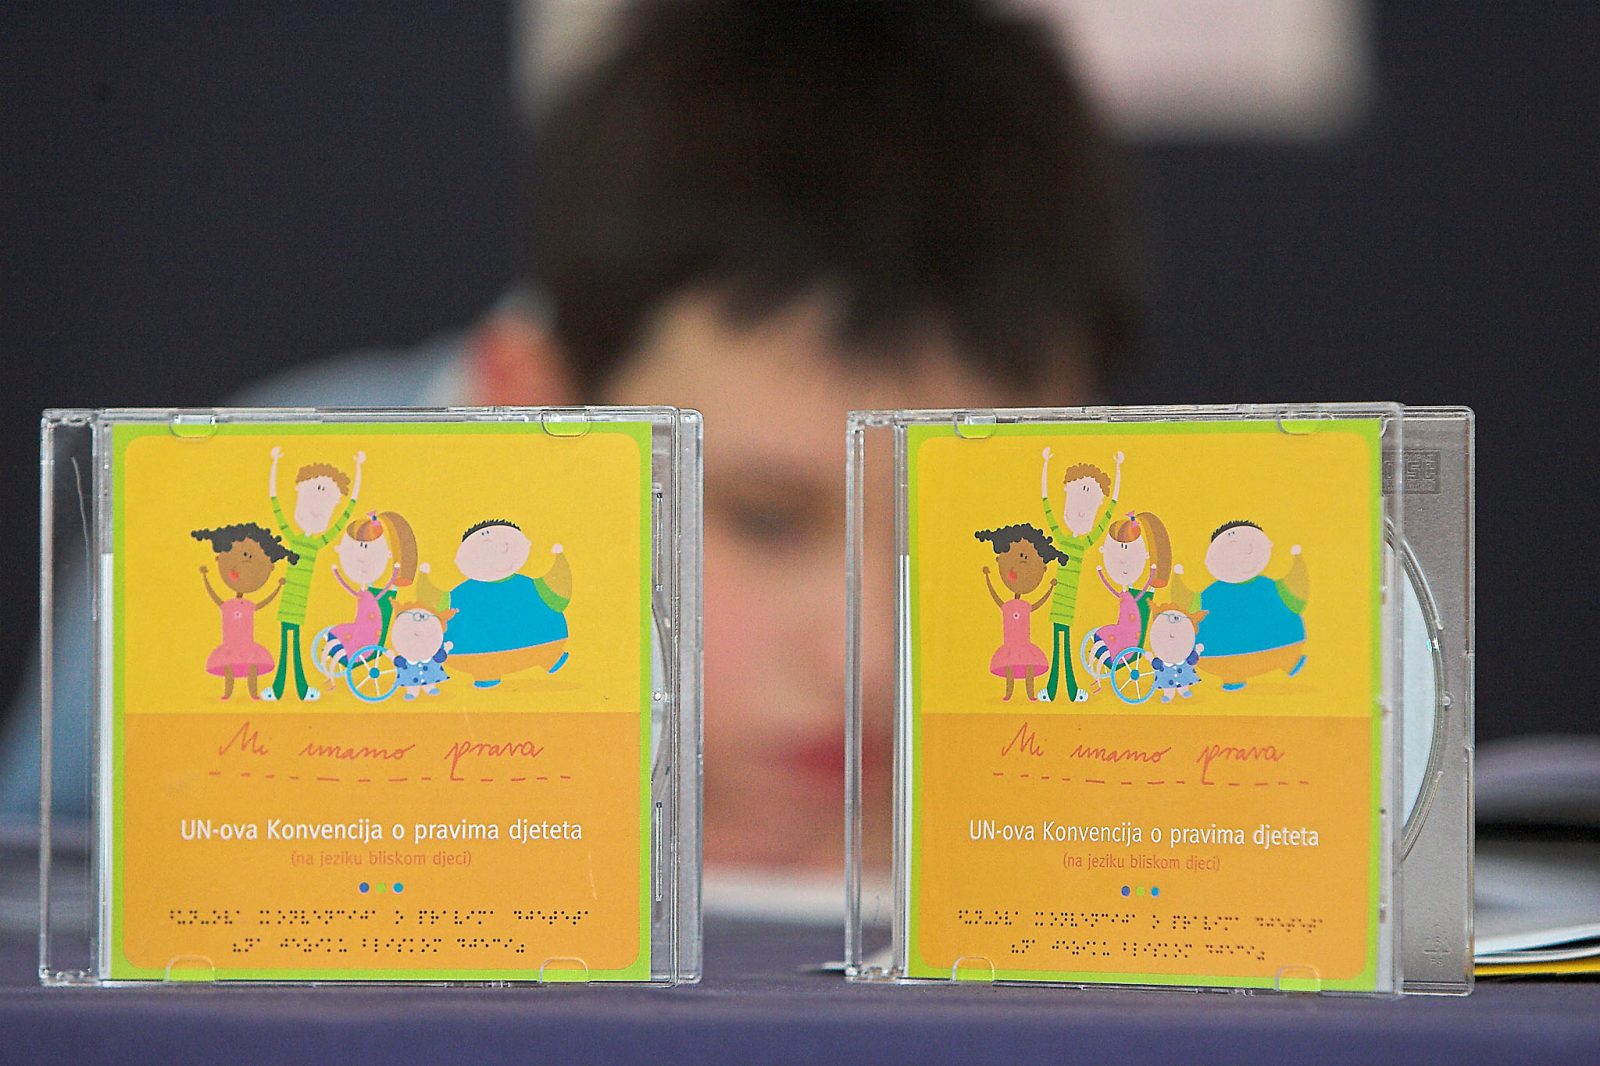 Zagreb, 12.06.2006 - Predstavljanje izdanja UN-ove Konvencije o pravima djeteta na Braillovom pismu za slijepe i slabovidne.
foto FaH/ Lana SLIVAR DOMINIÆ